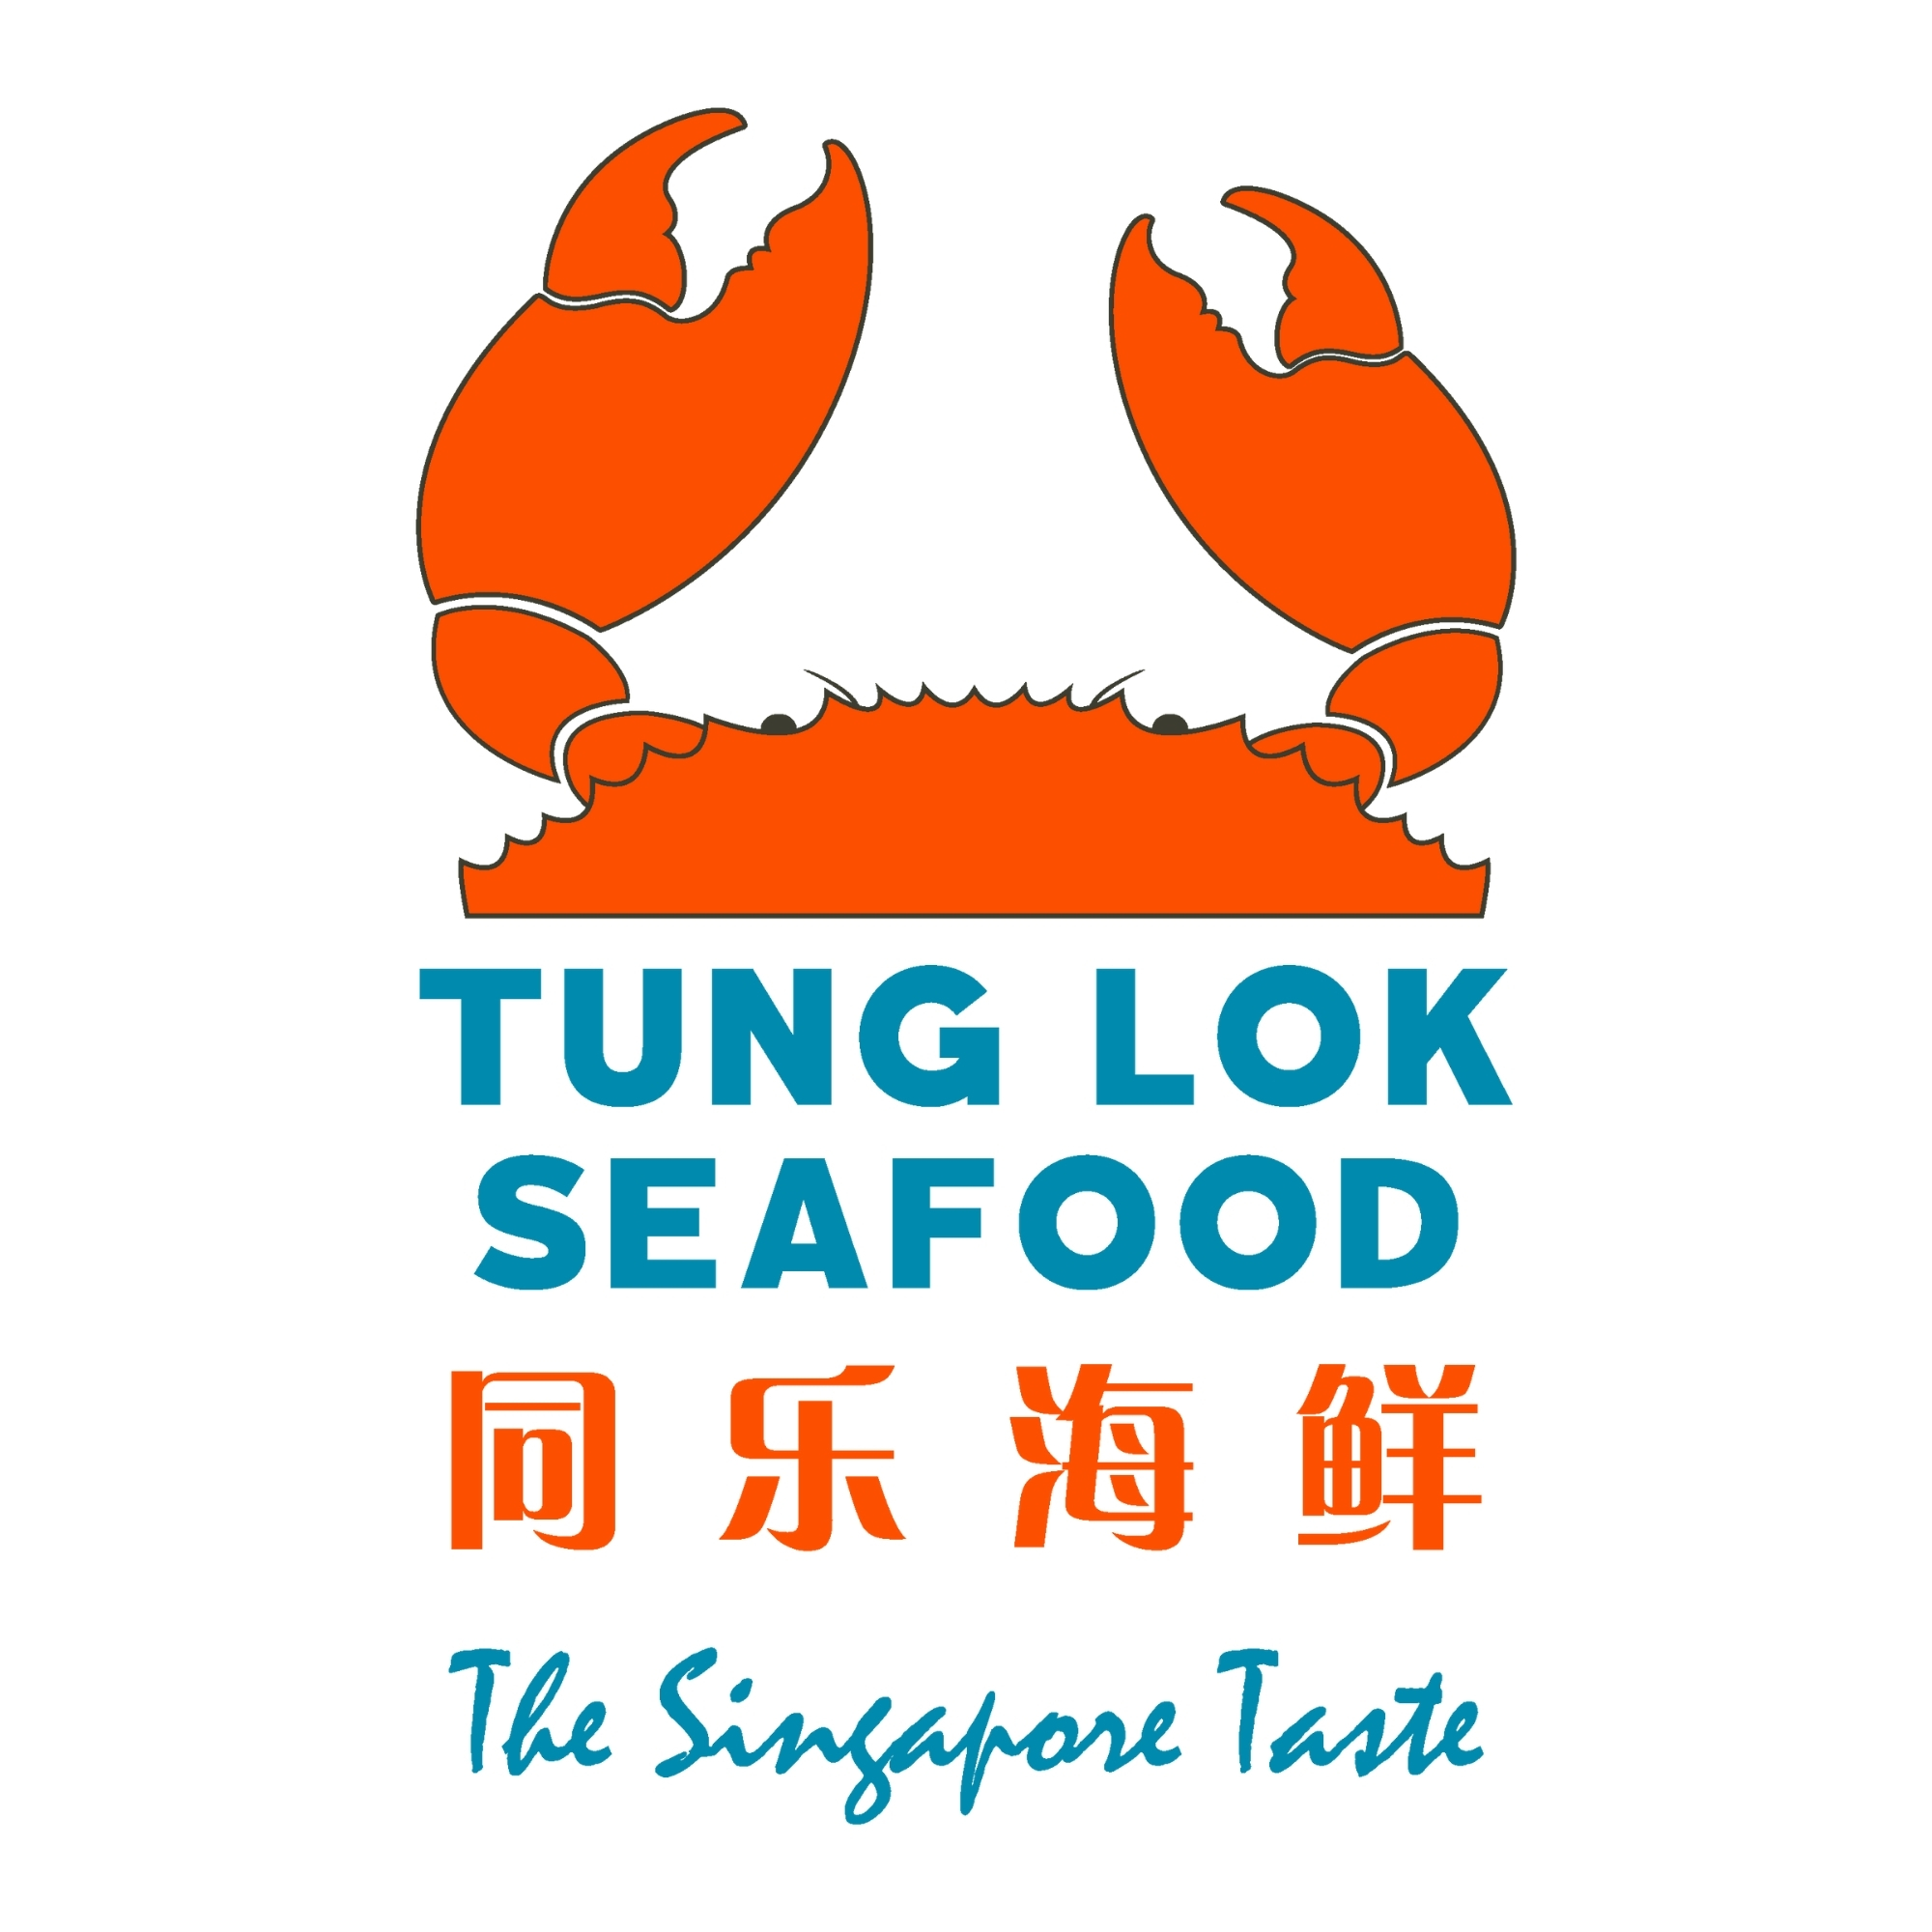 TungLok Seafood